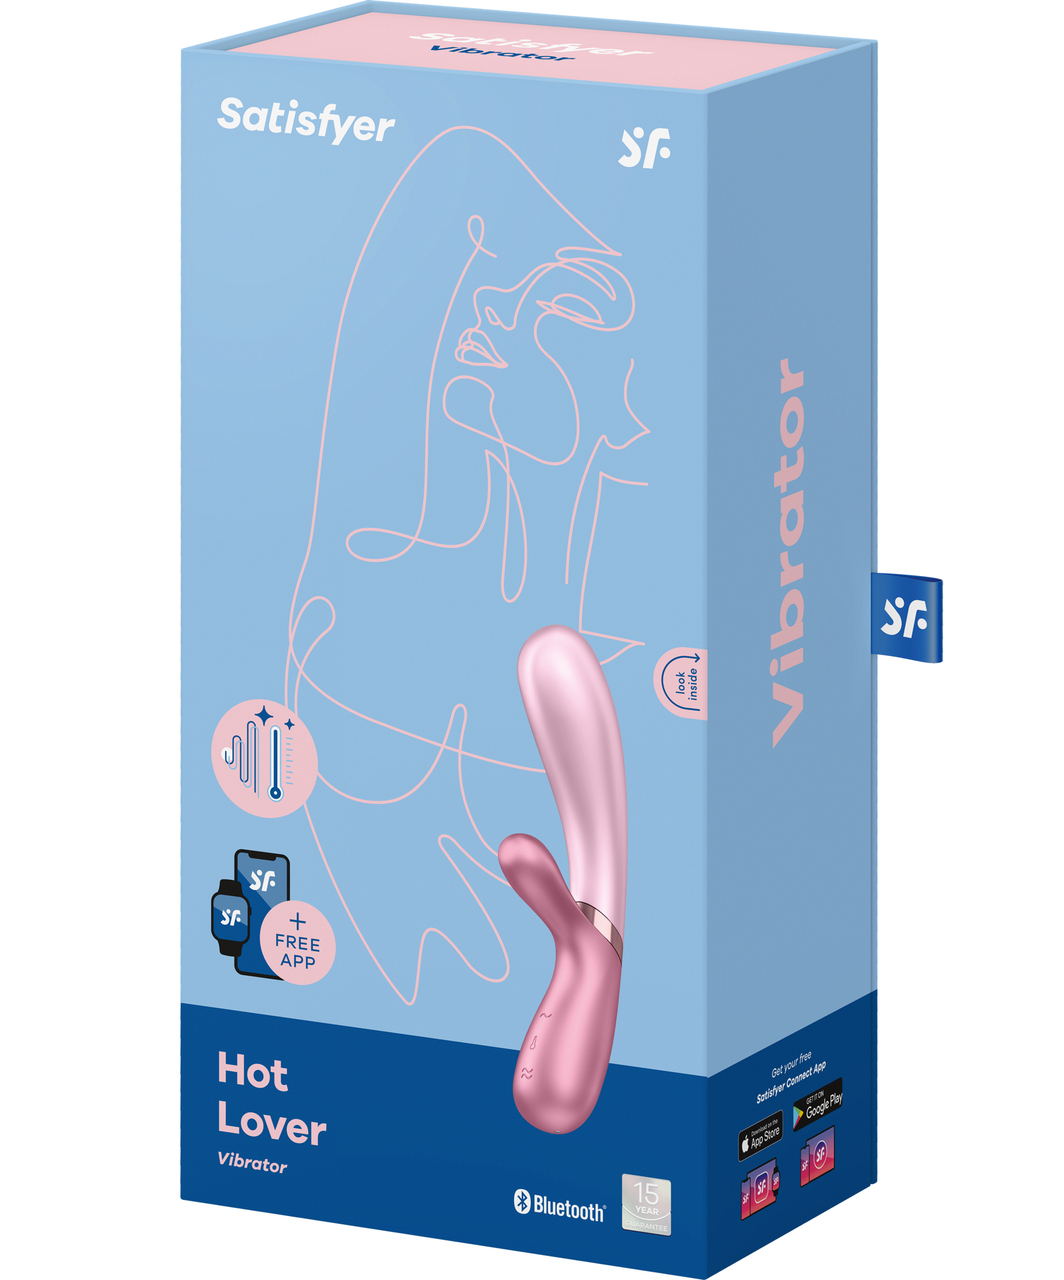 Satisfyer Hot Lover vibrators